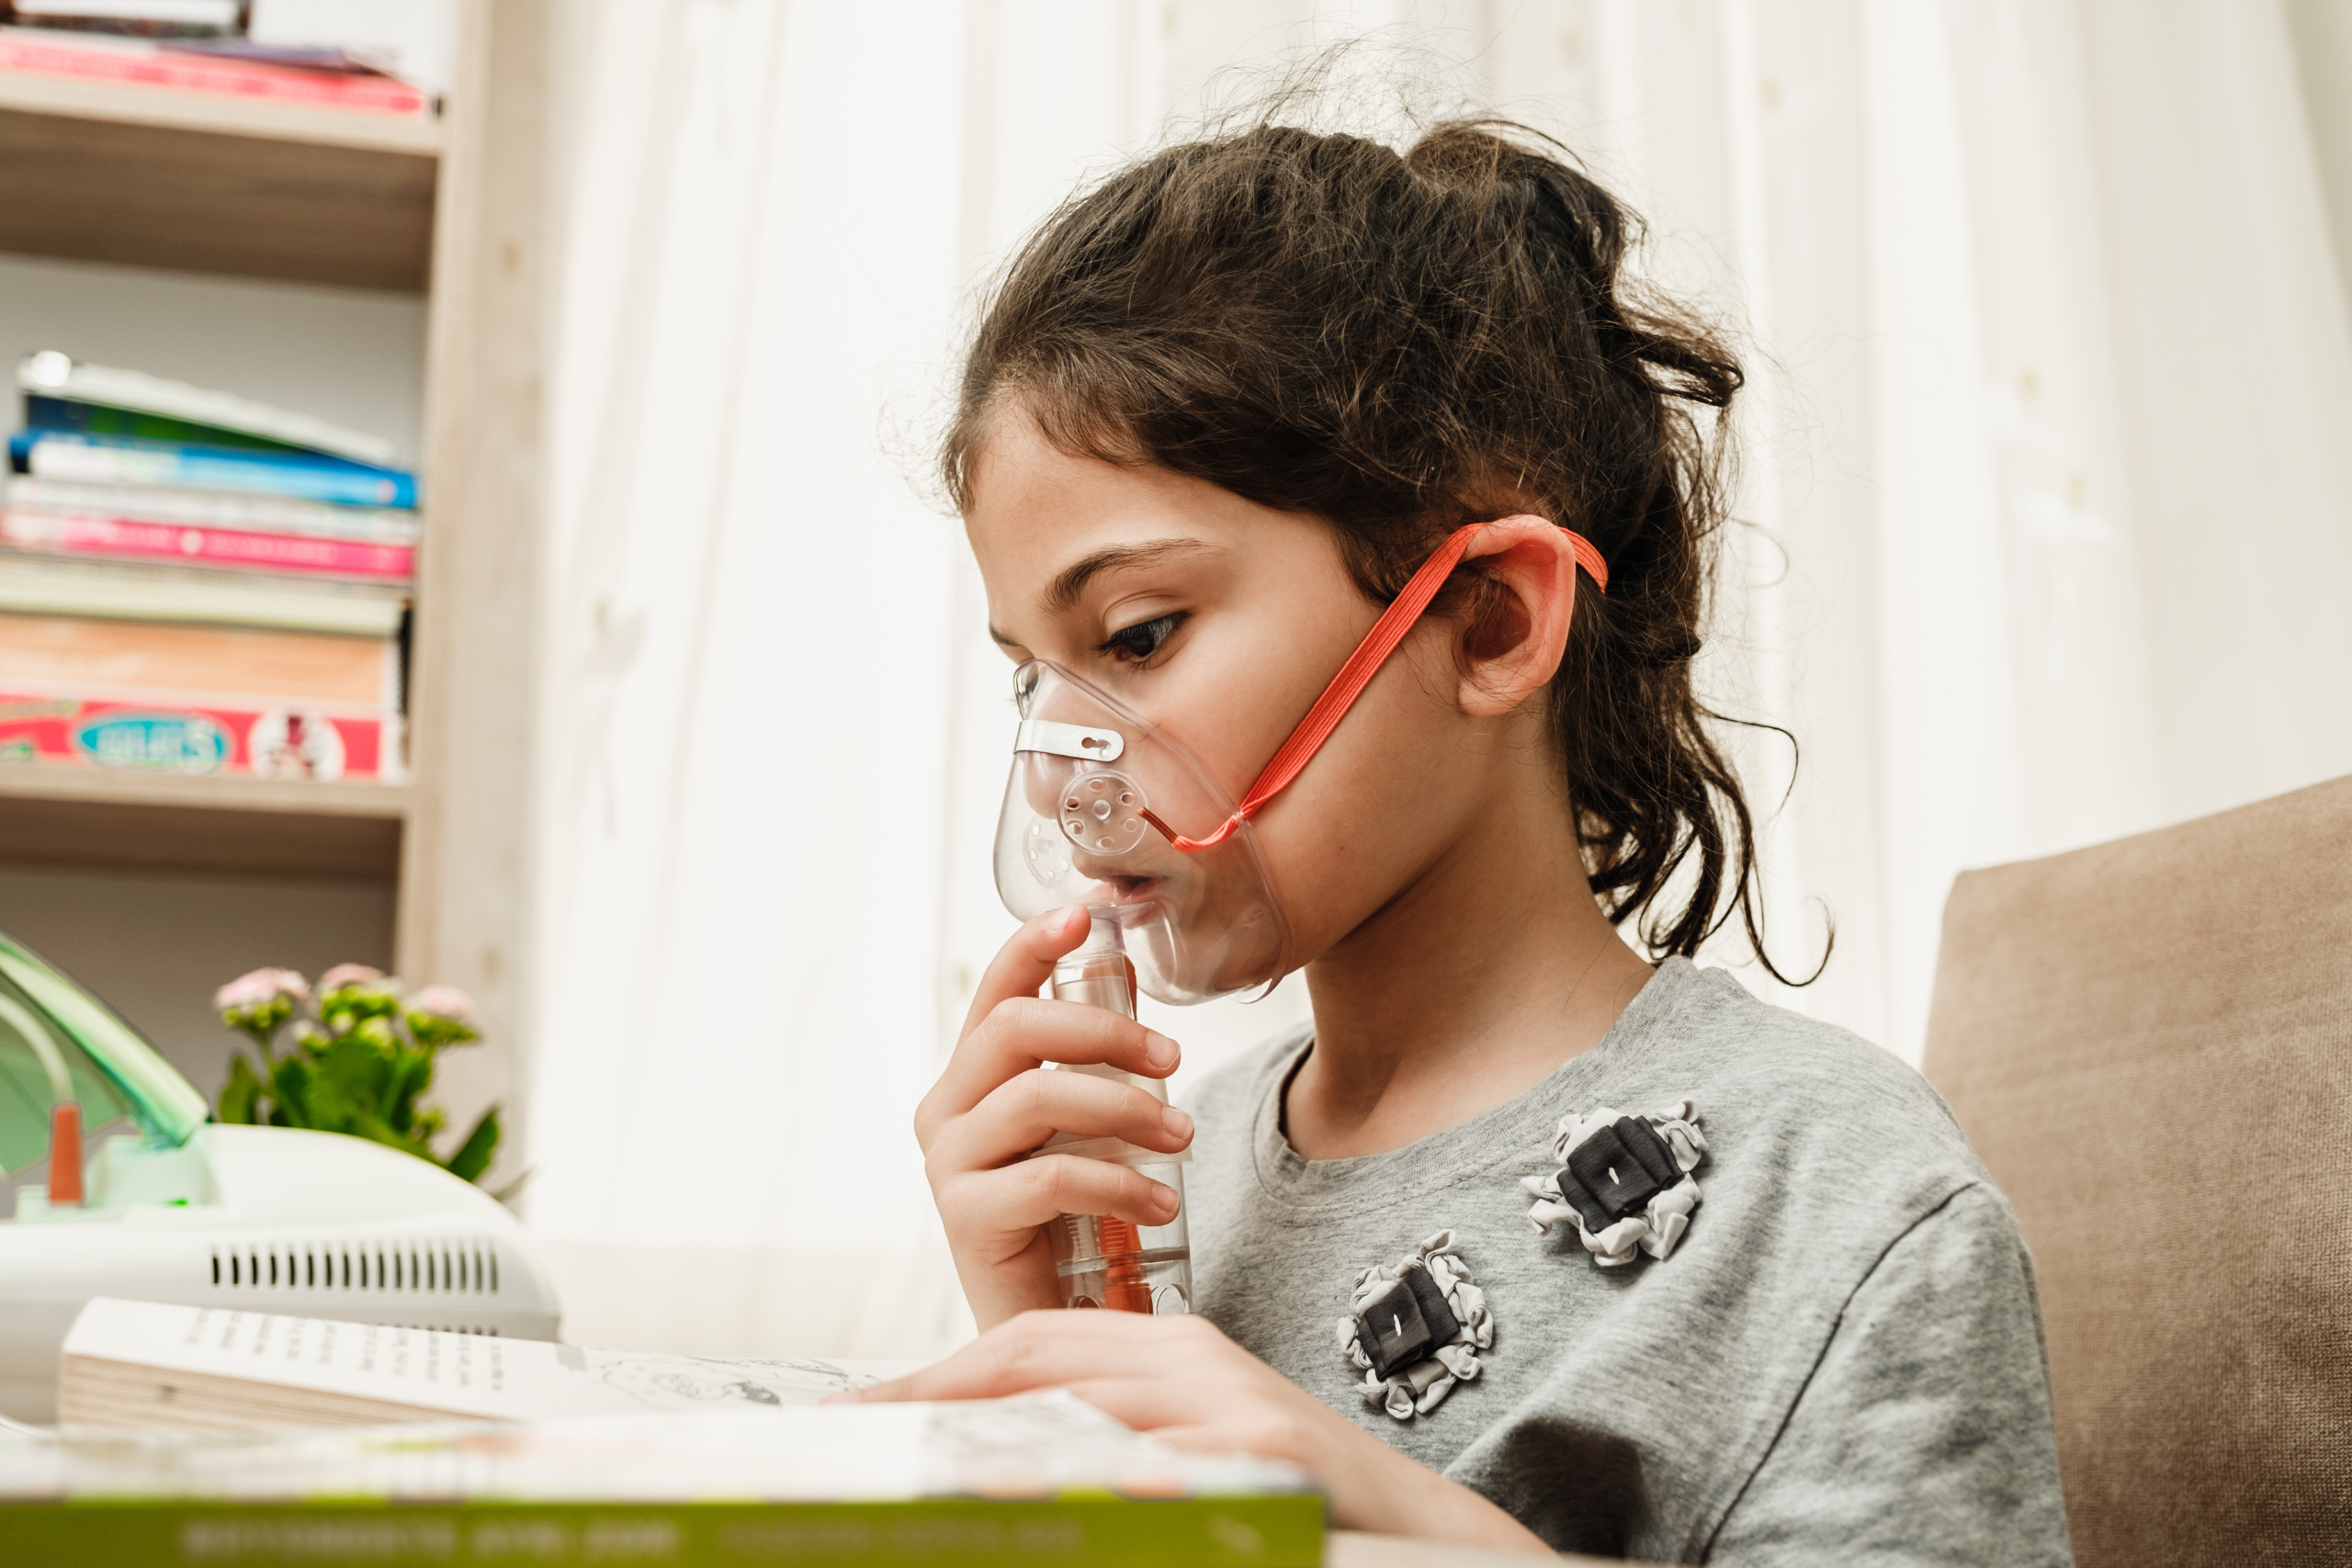 child using nebulizer while reading book